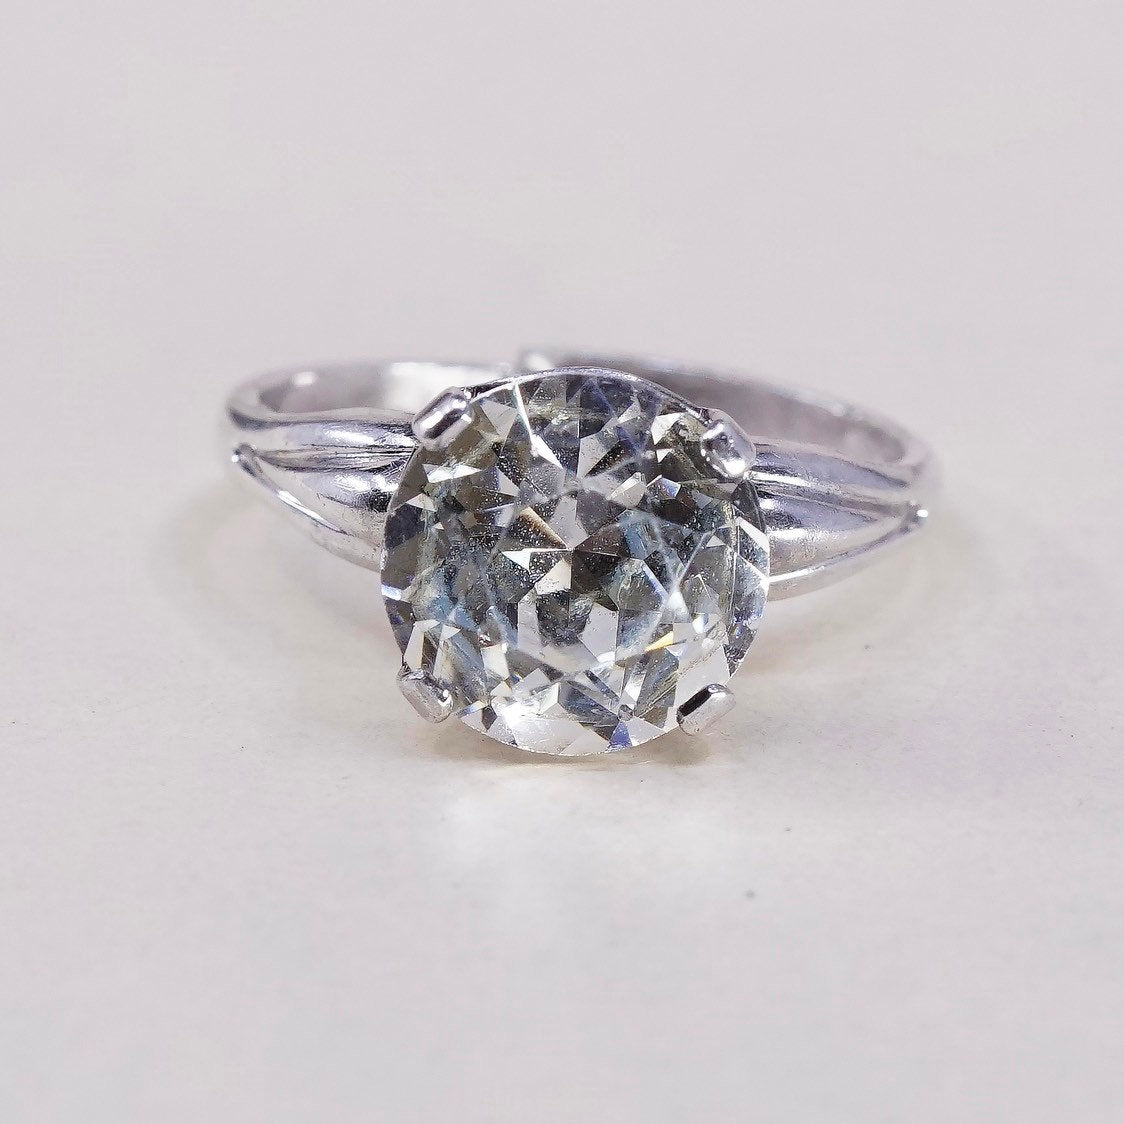 sz 7.5,vtg CC sterling silver handmade ring, engagement ring w/ square cz